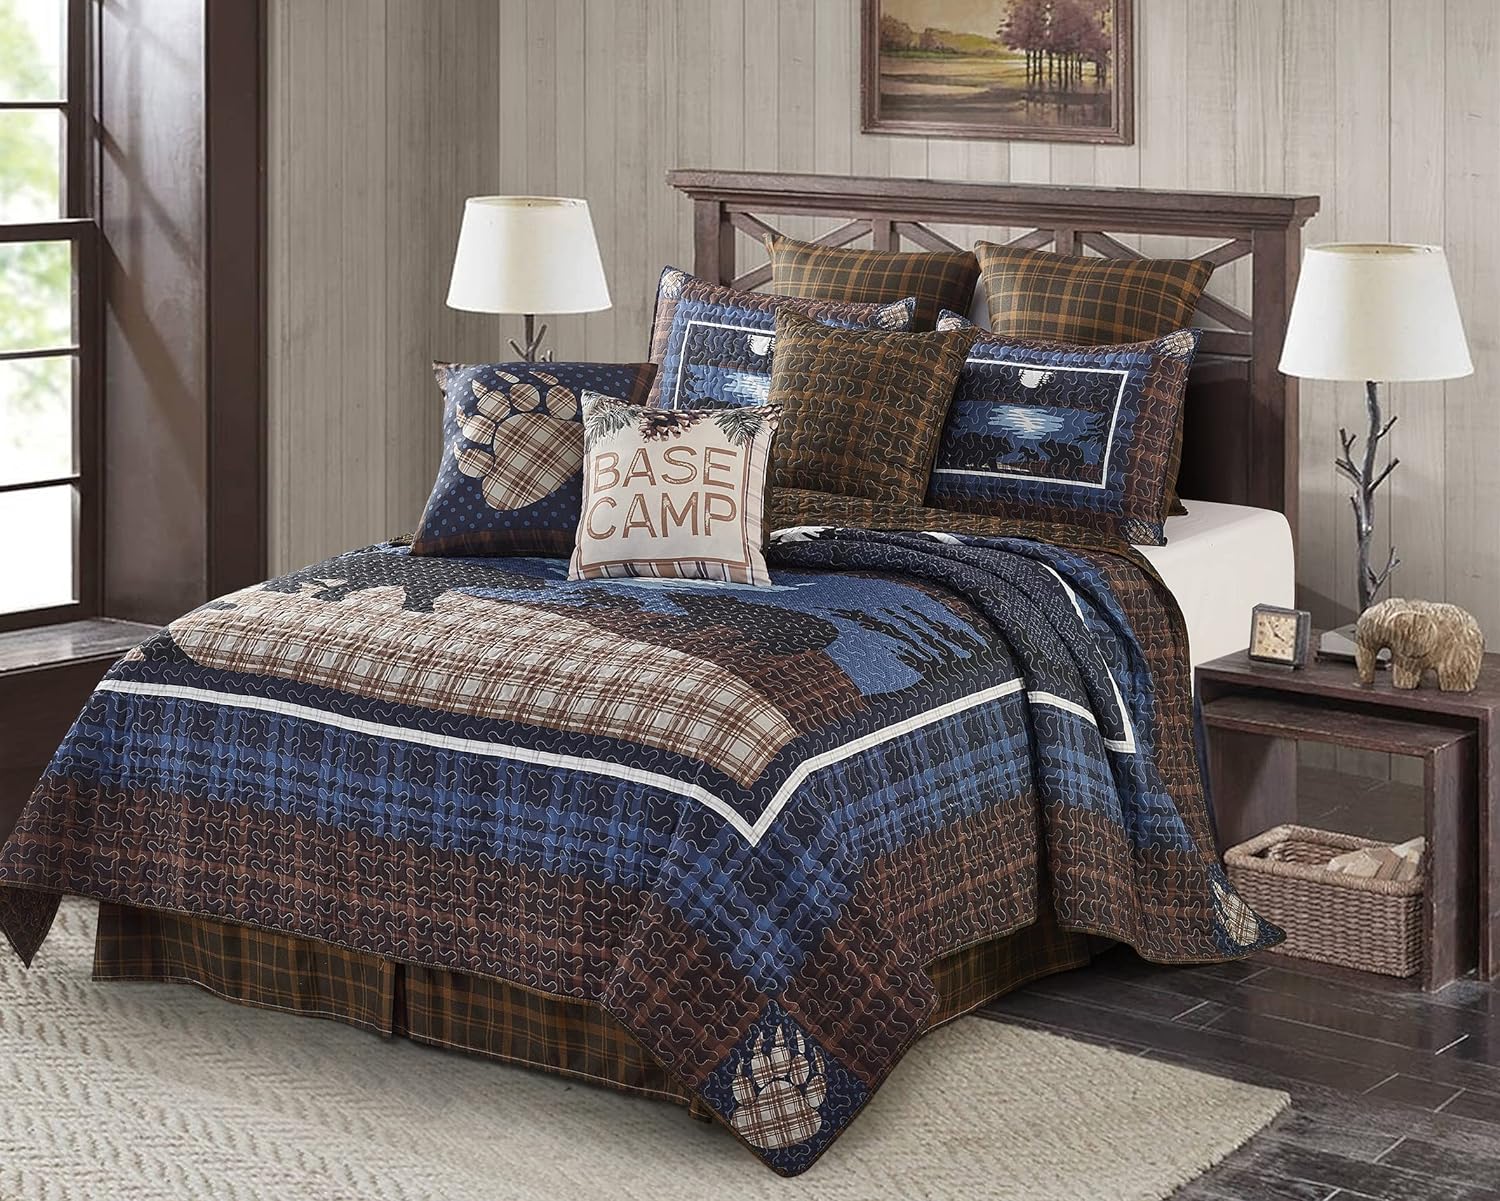 Virah Bella 2 Piece Full/Queen Lodge Quilt Bedding Set - Rustic Country Reversible Comforter Set with Decorative Pillow Shams - Moondance